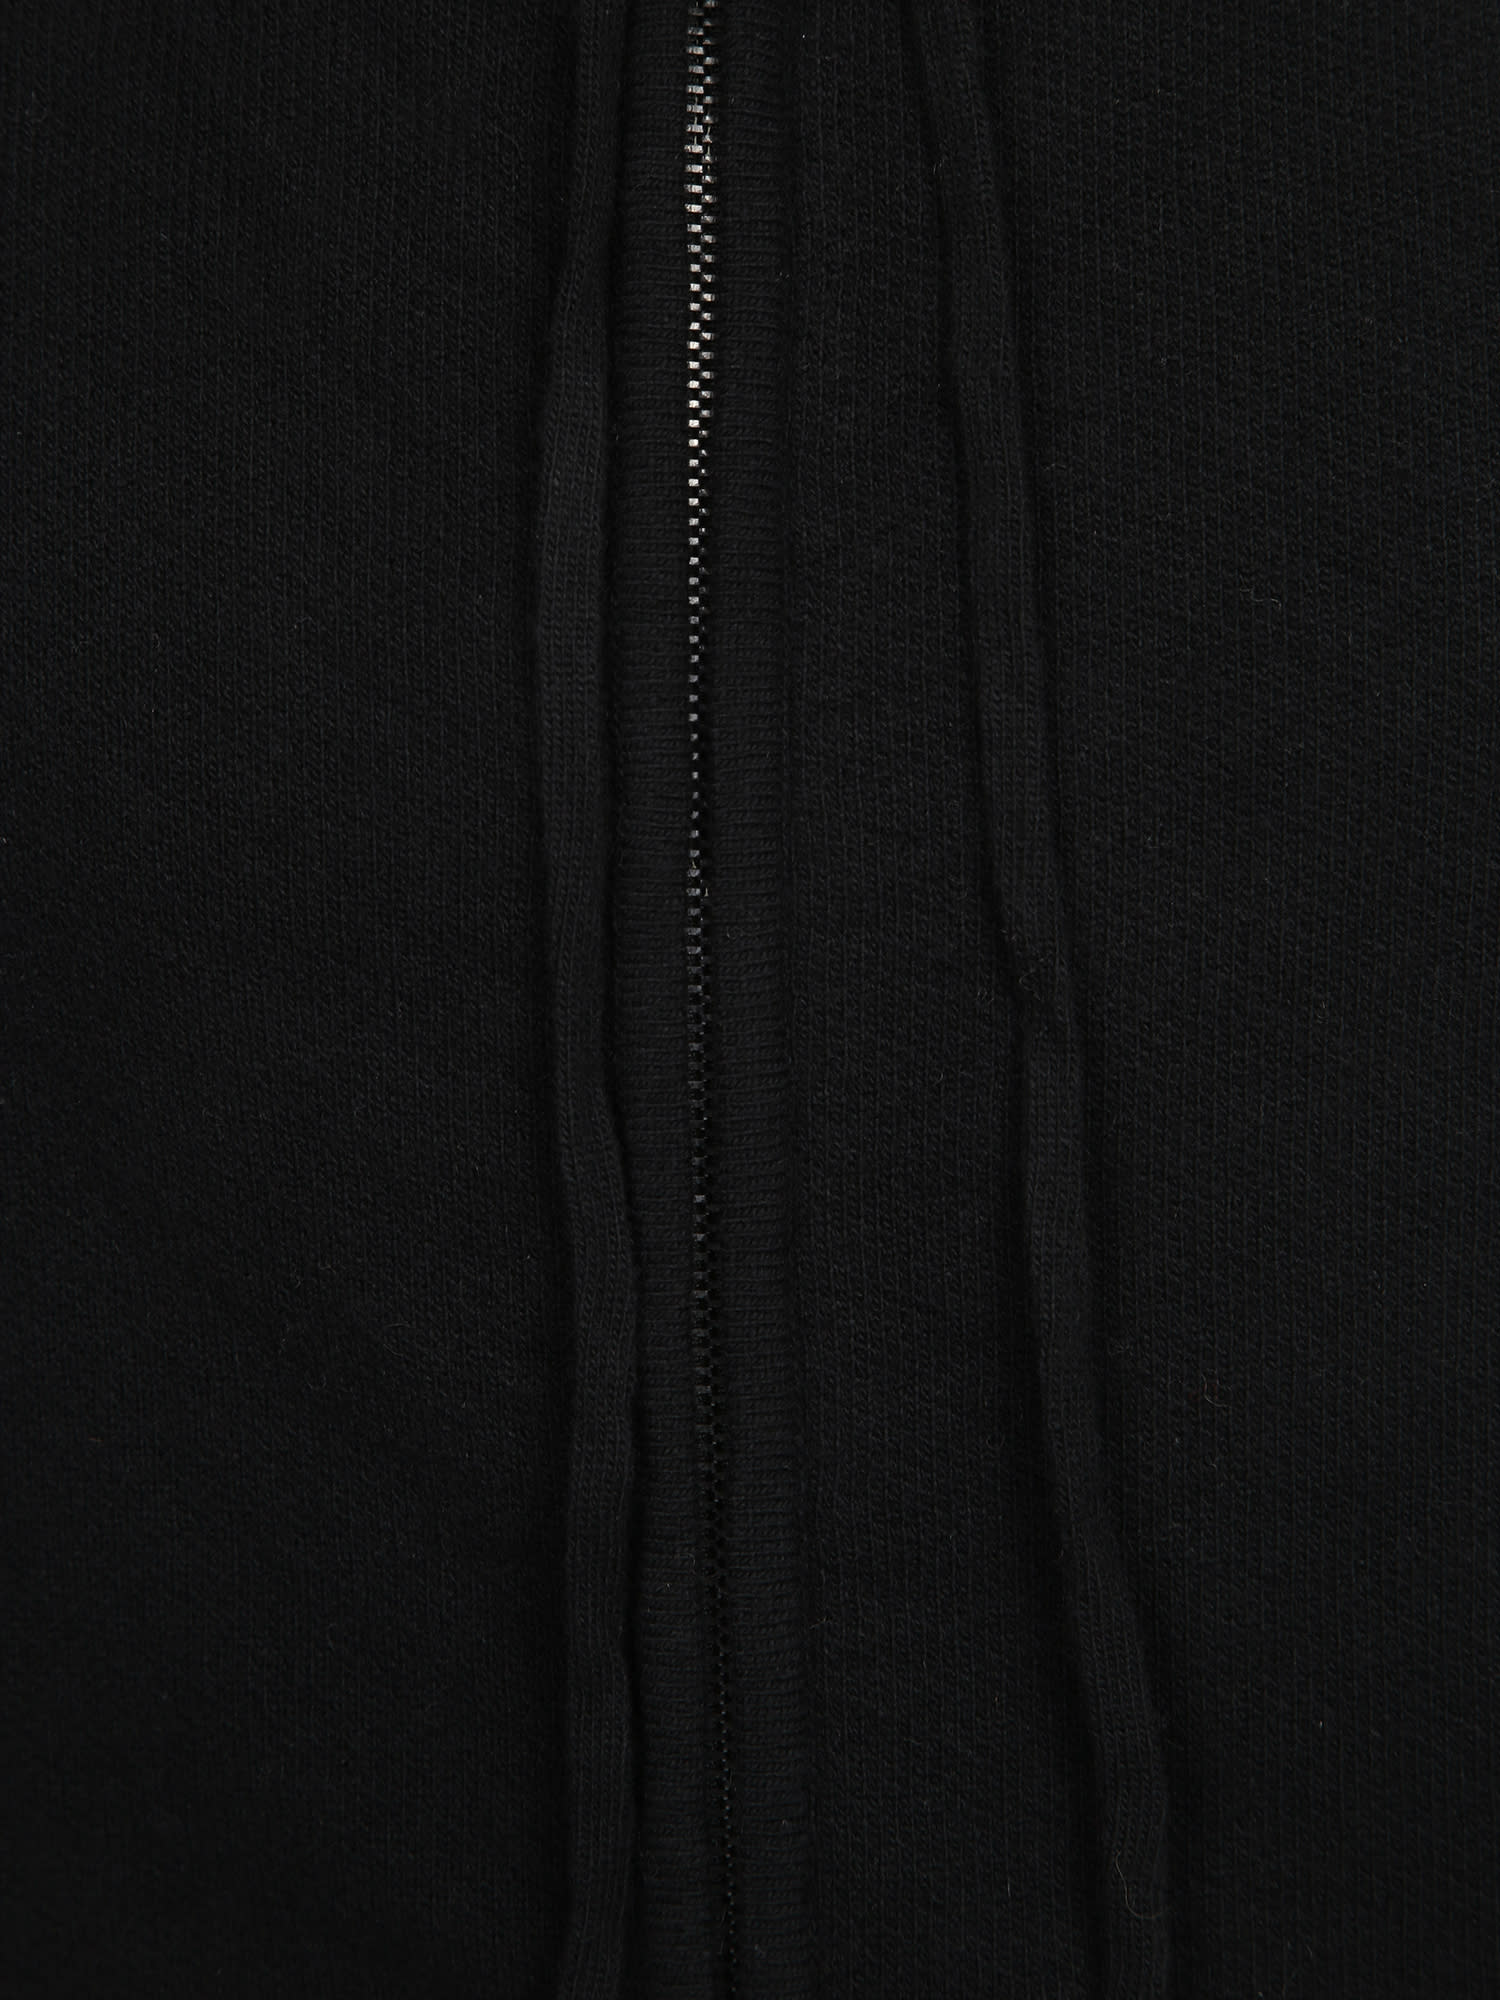 Shop Original Vintage Style Zipped Jacket In Black